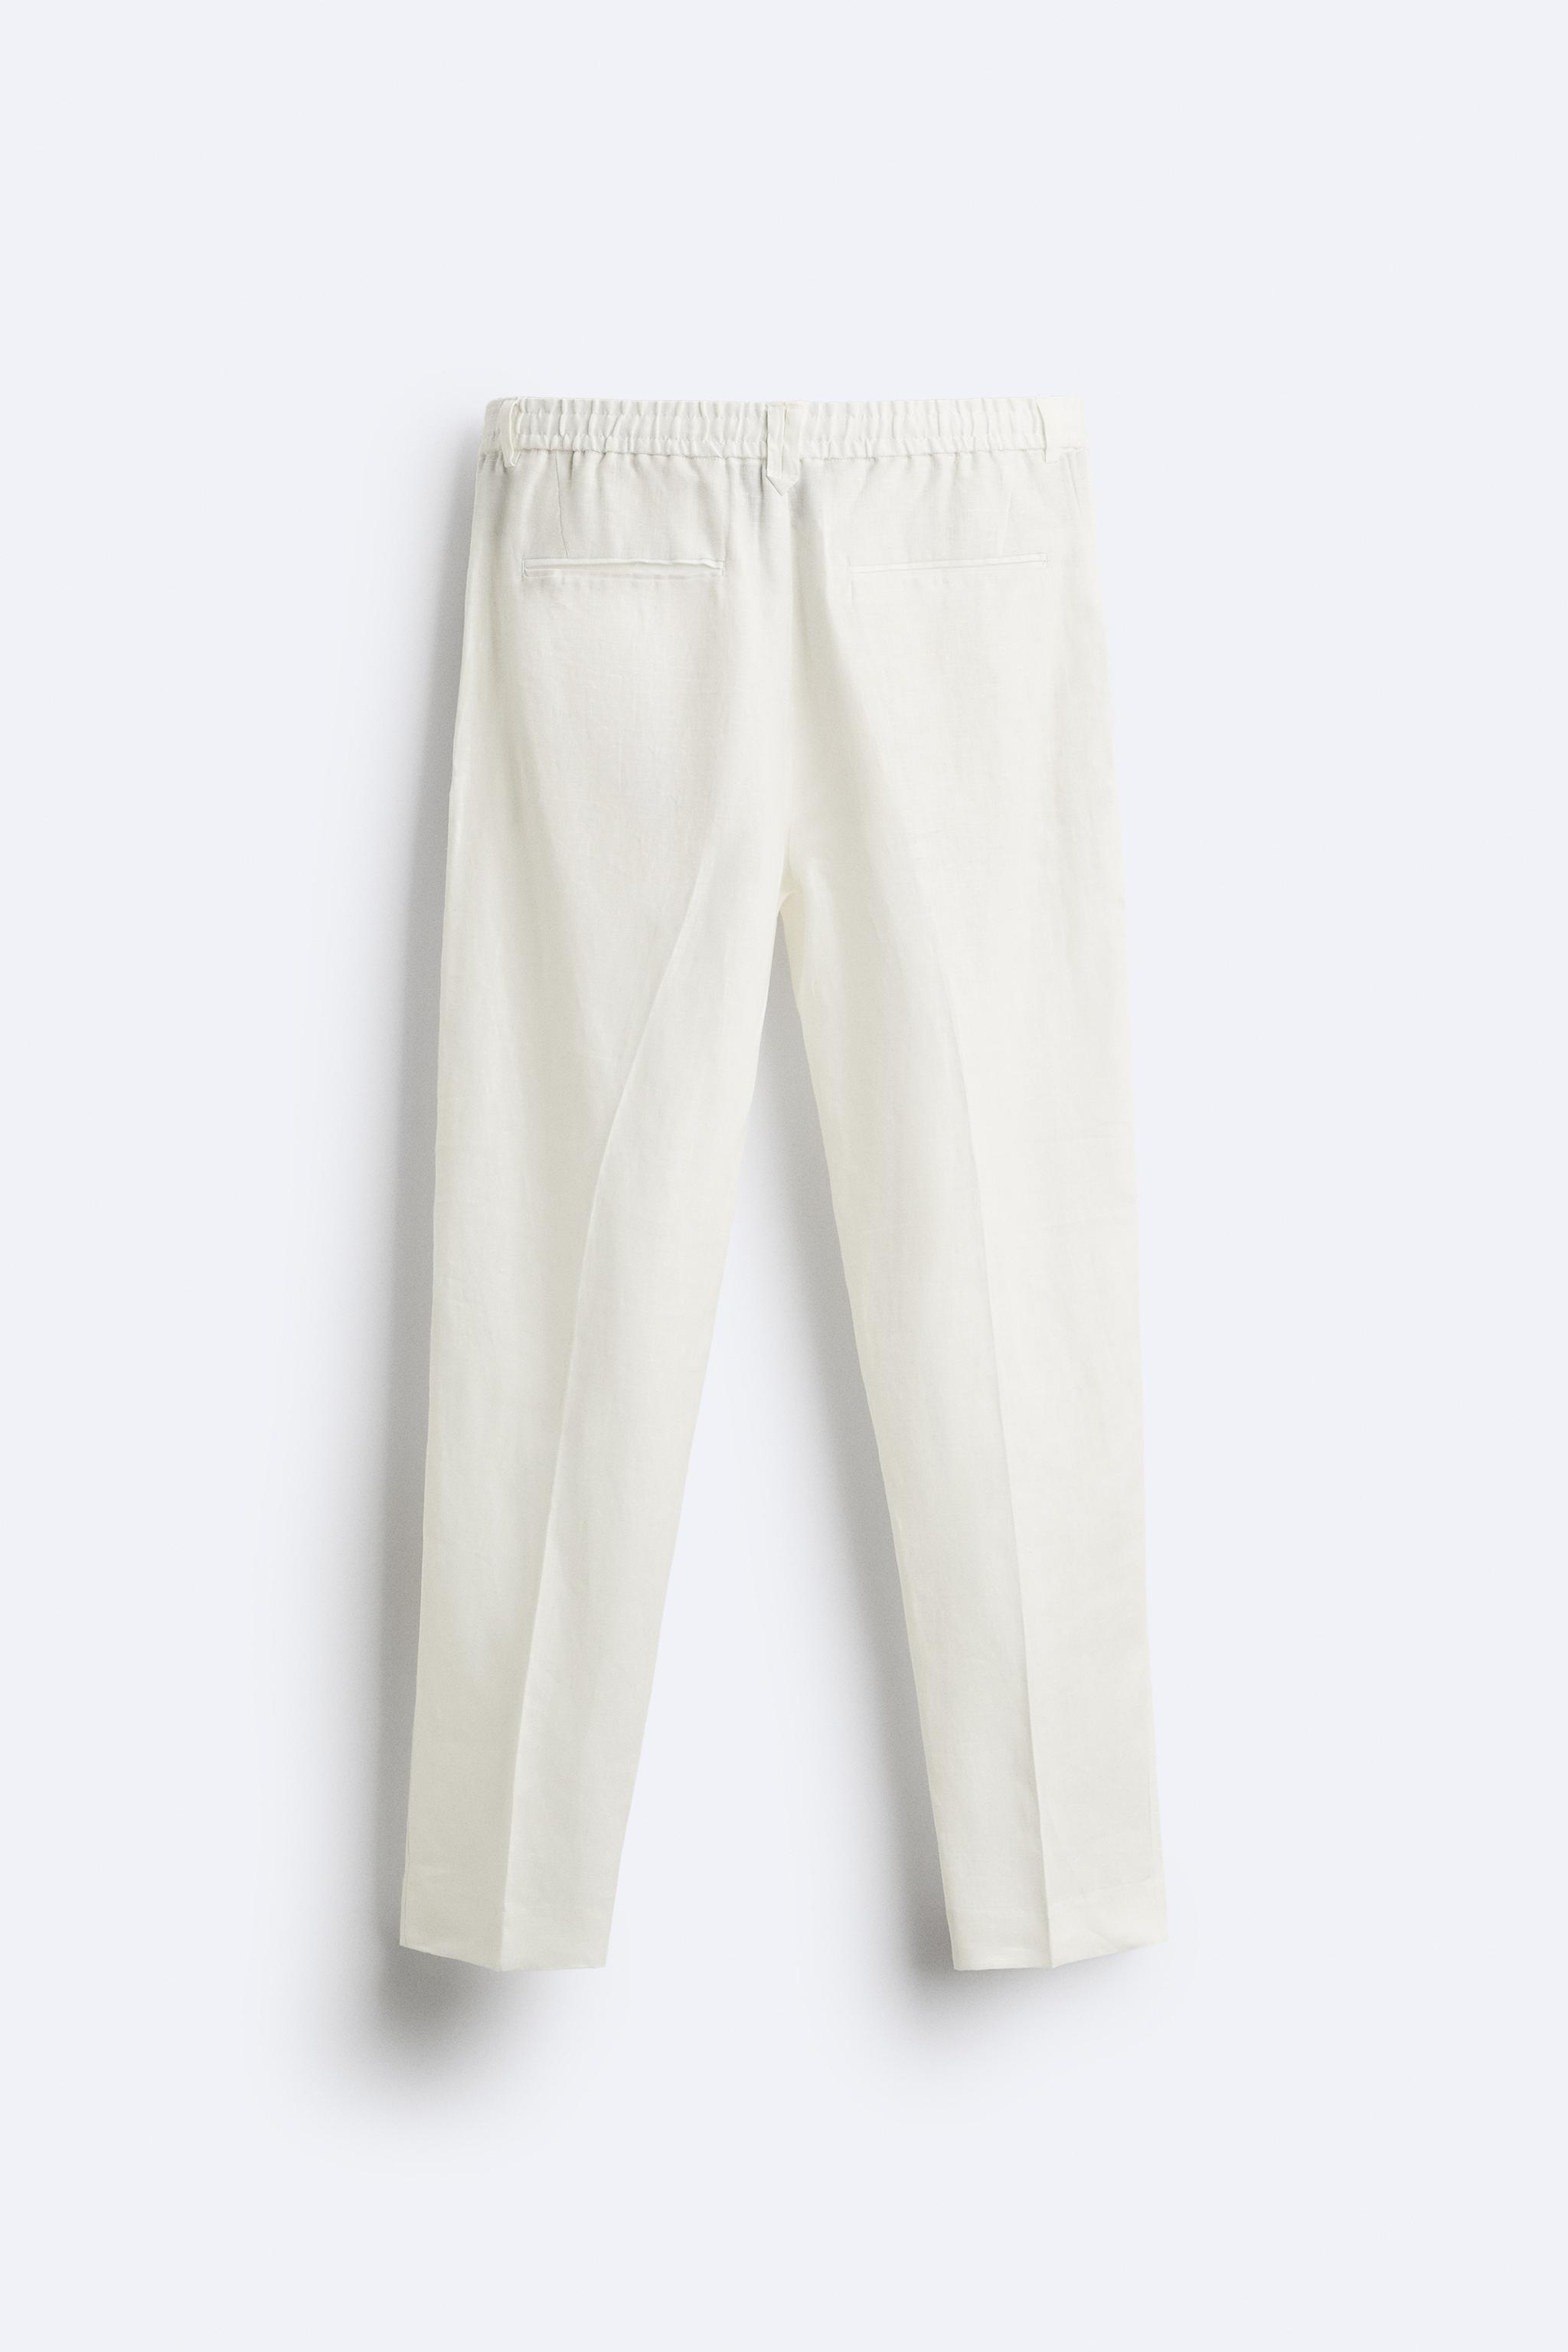 Guayabera Pants. for Ladies. Perfect Fit. Ladies Guayabera Pants Strap  Belt. Linen 100 %. White Color.